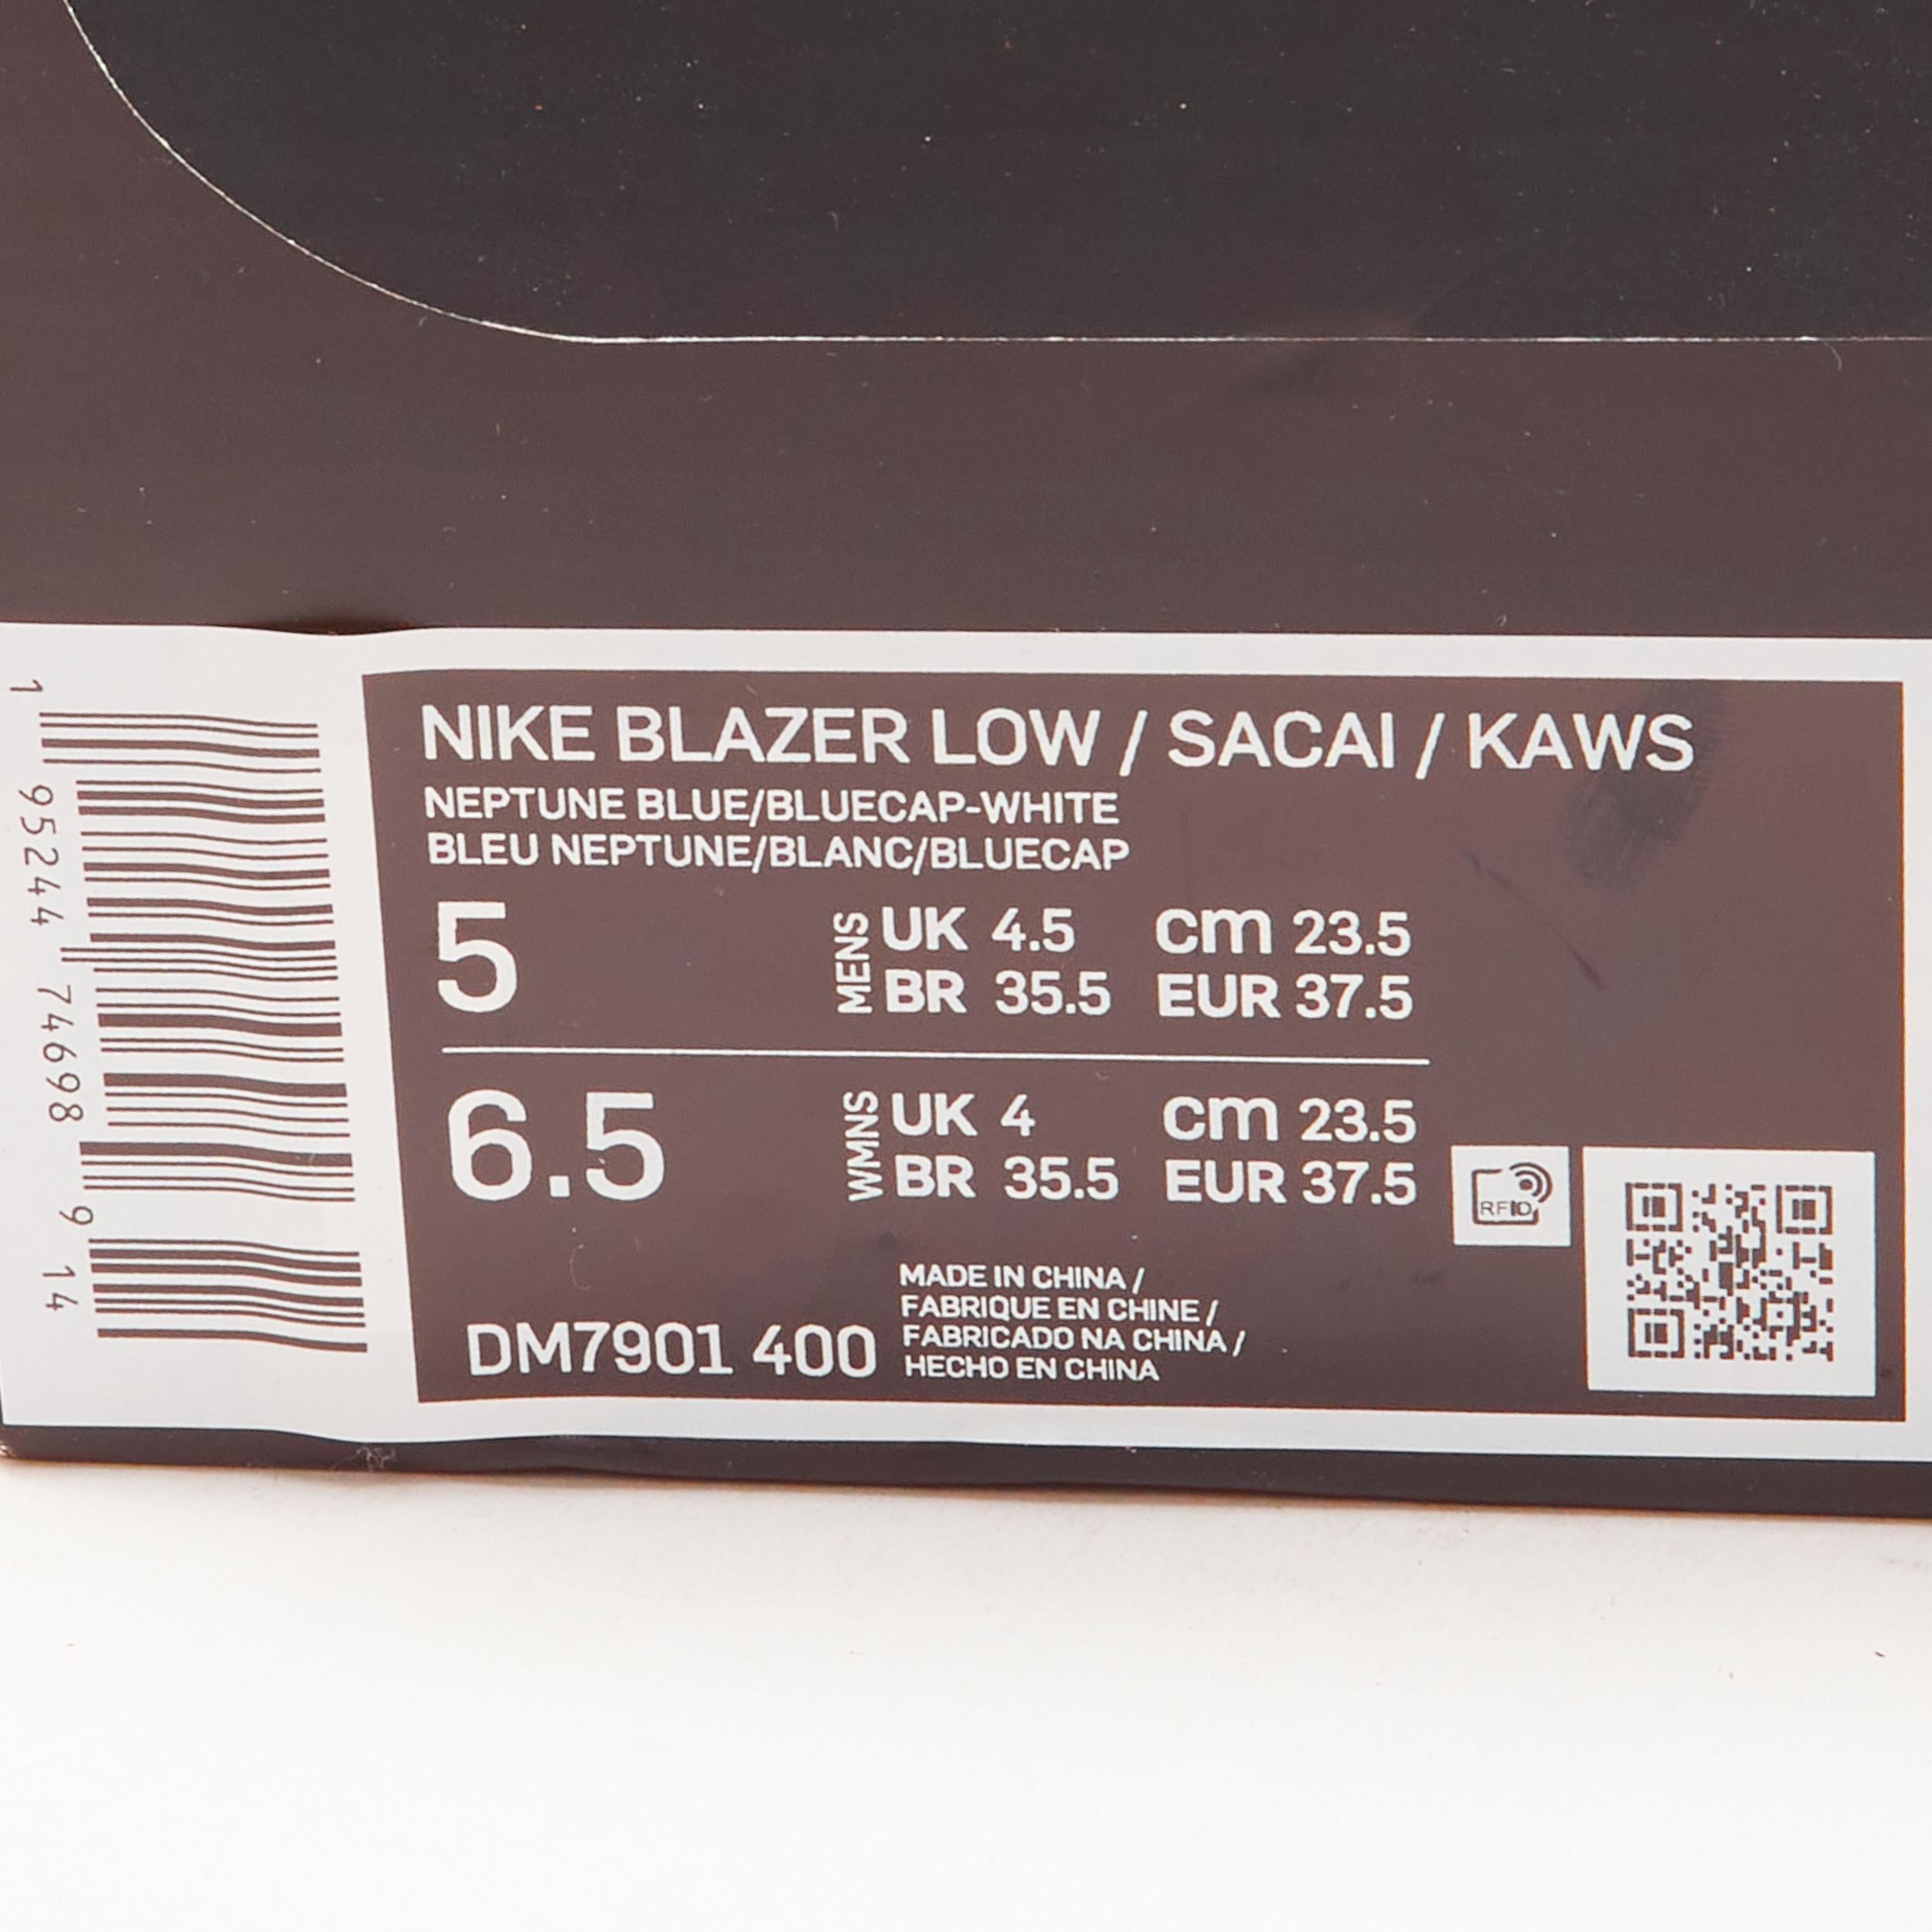 new SACAI KAWS Nike Blazer Low neptune blue mid sneaker EU5 EU37.5 DM7901 400 For Sale 7